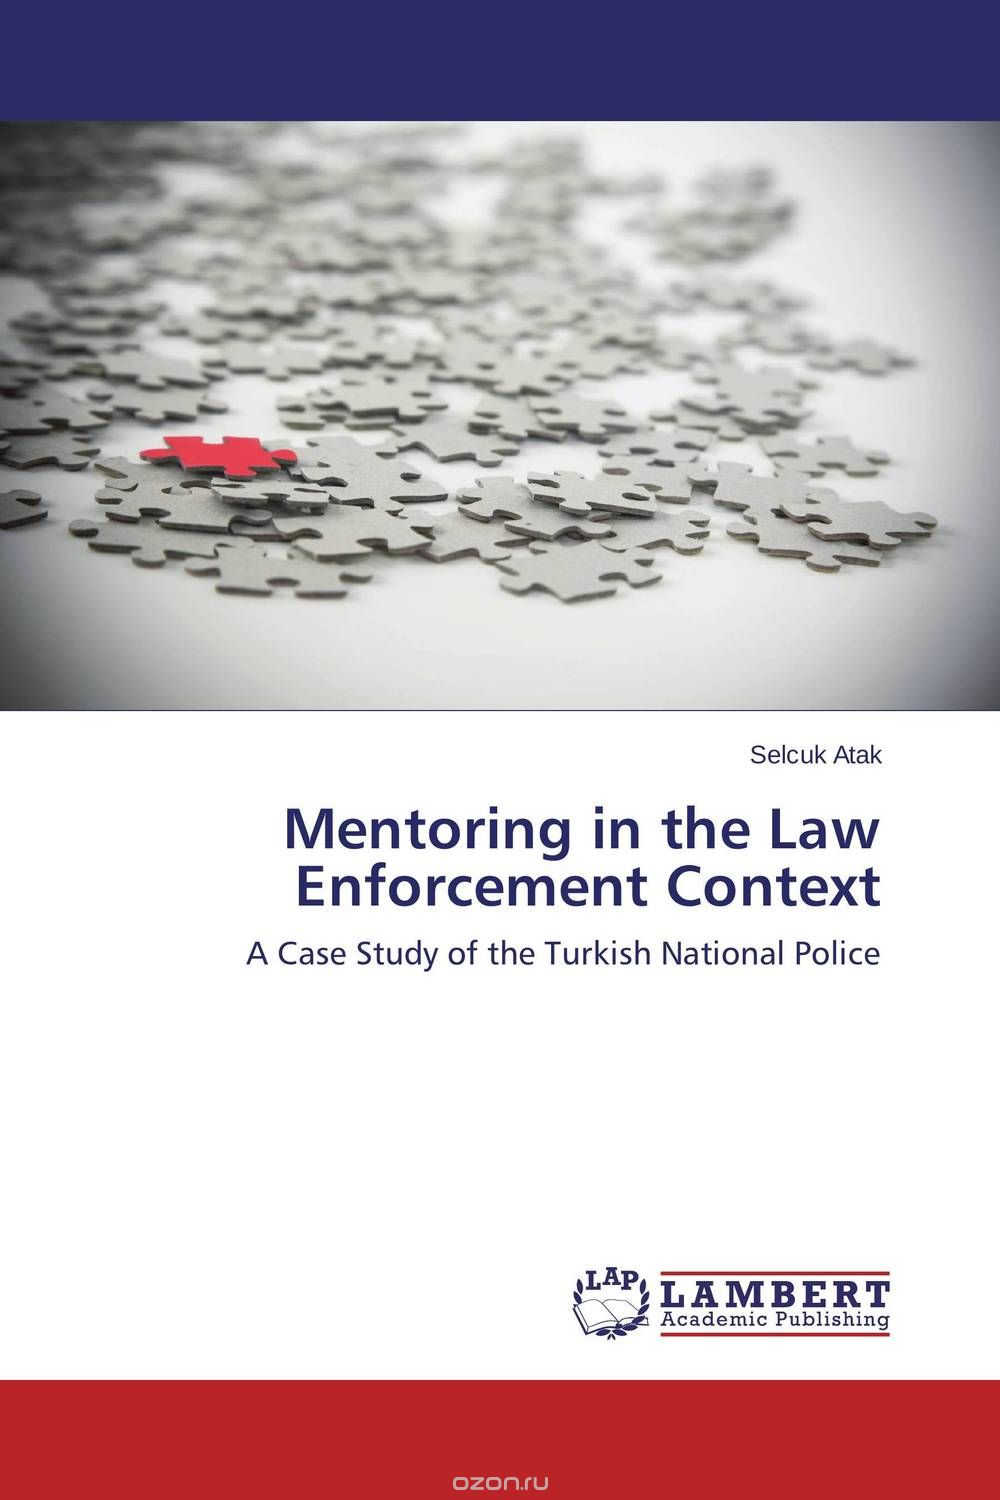 Скачать книгу "Mentoring in the Law Enforcement Context"